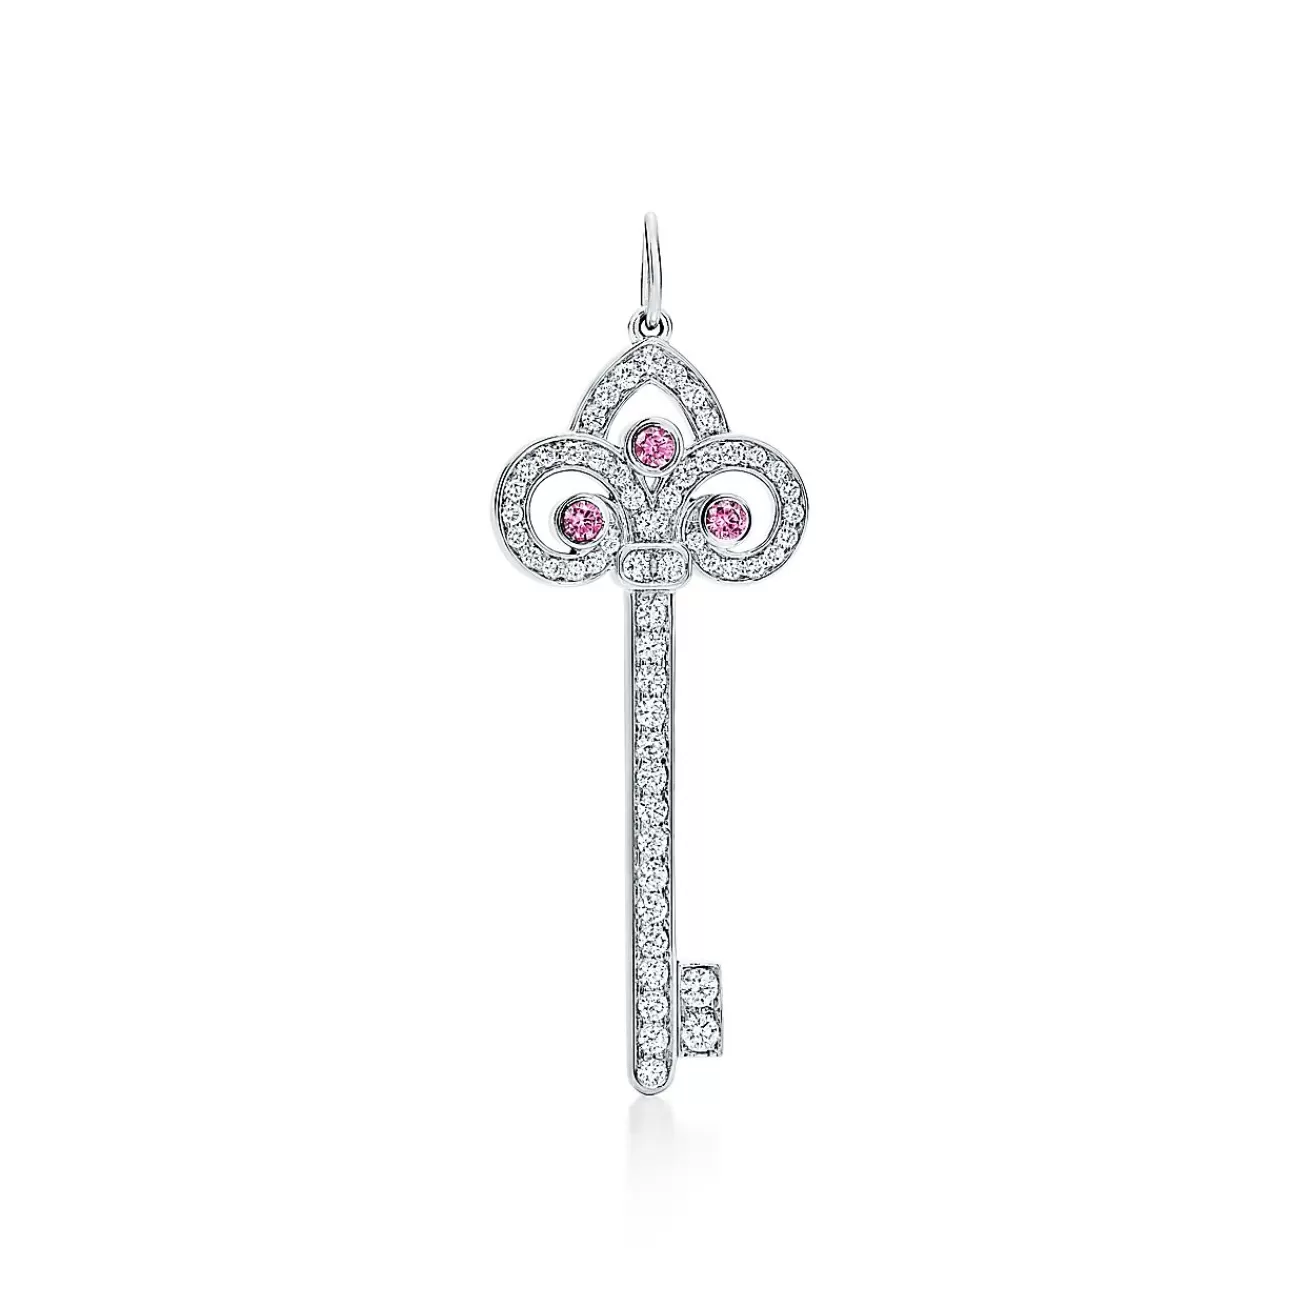 Tiffany & Co. Tiffany Keys Tiffany Fleur de Lis key pendant in platinum with gemstones. | ^ Platinum Jewelry | Diamond Jewelry